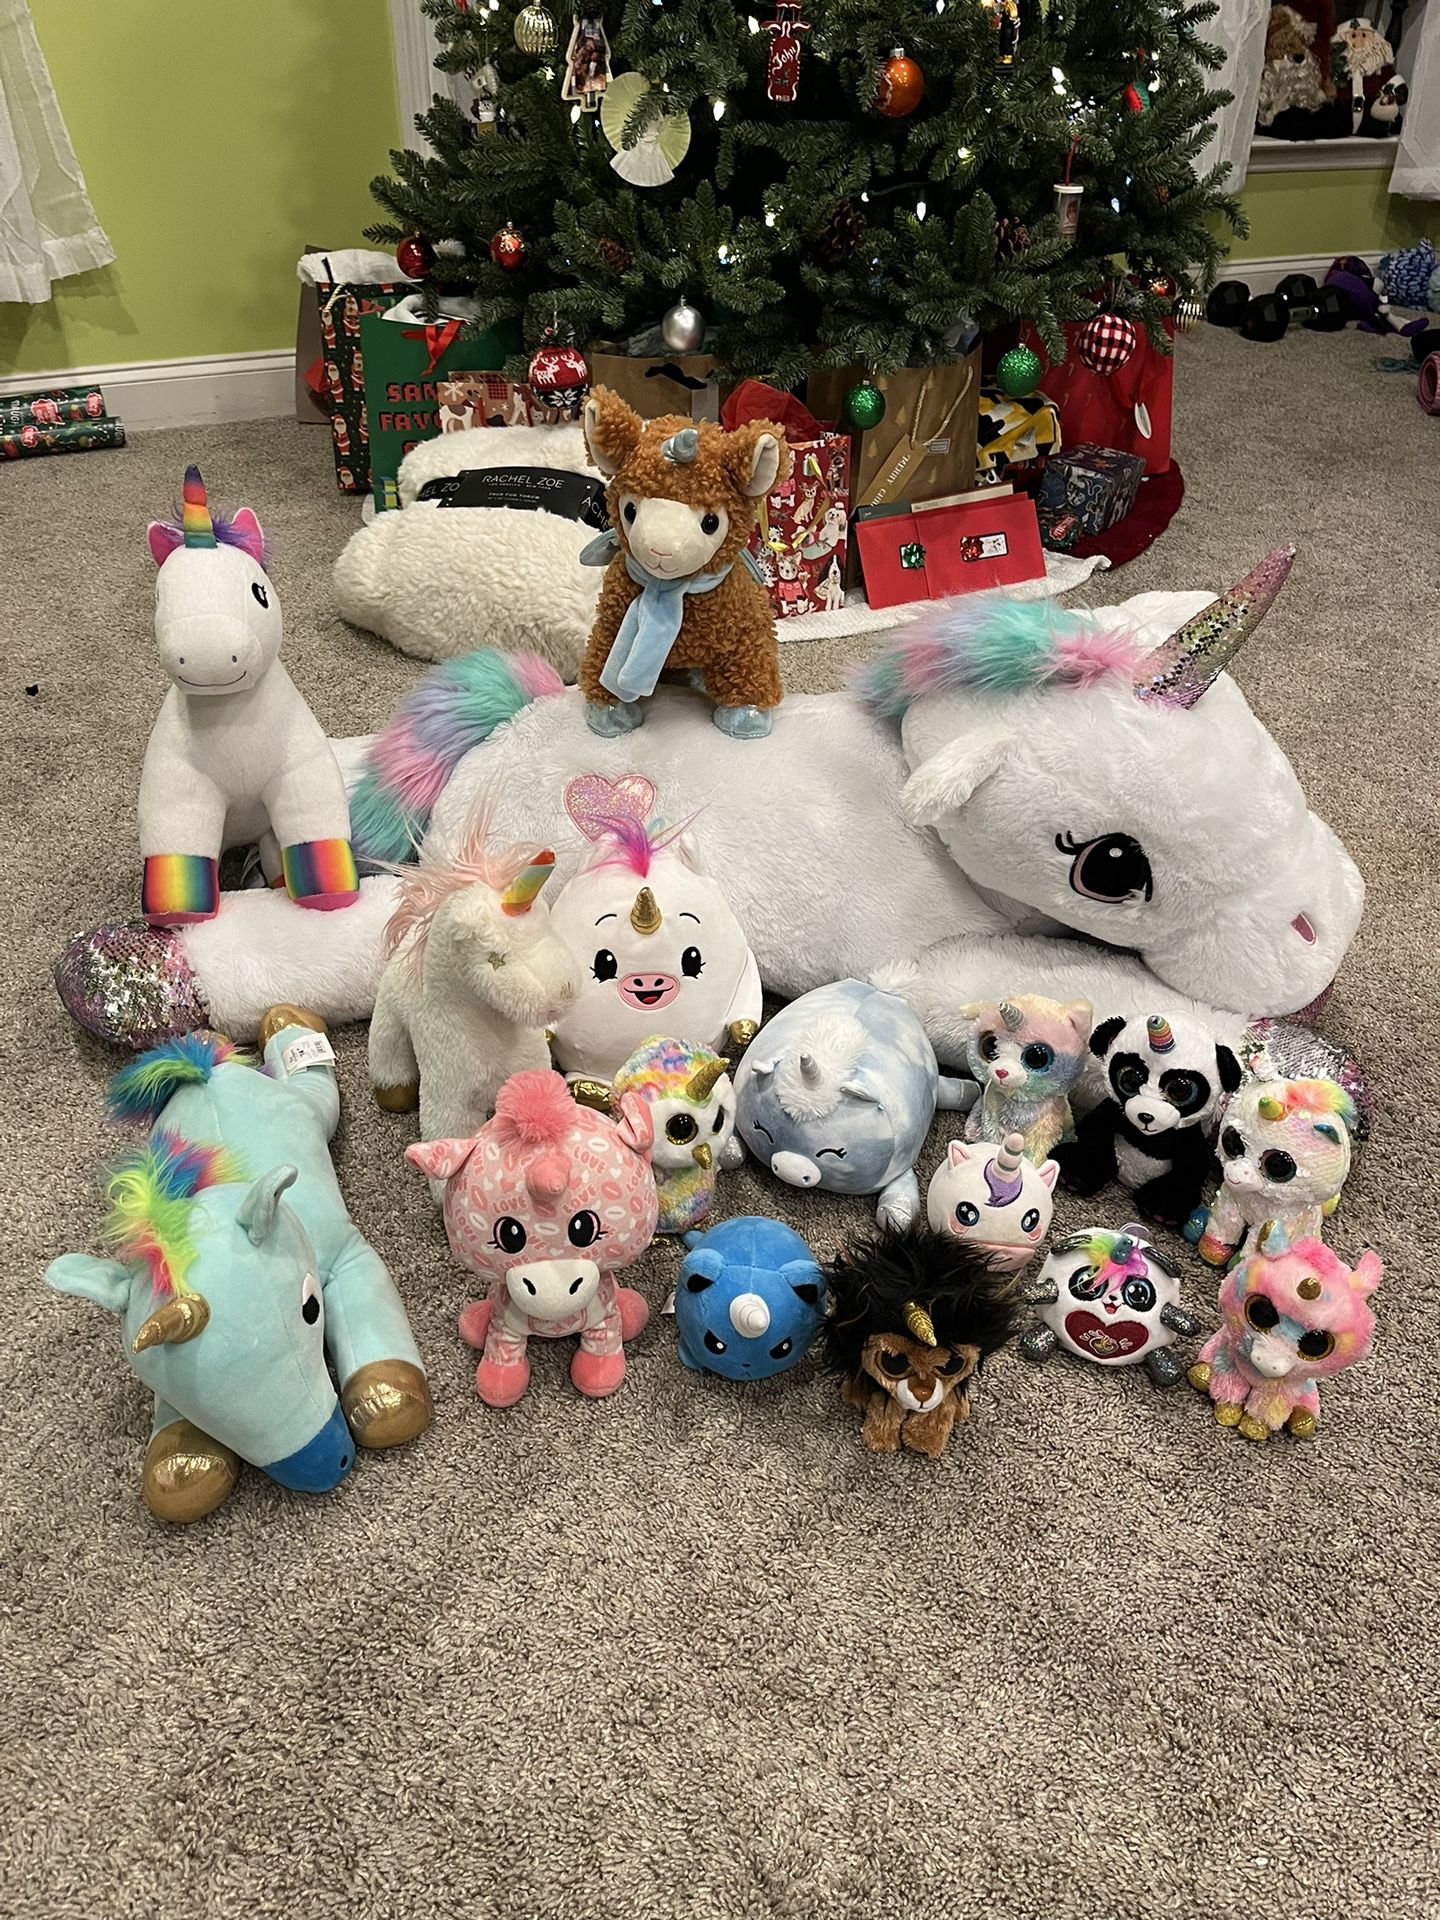 Unicorn Stuffed Animal Assortment 🦄❤️